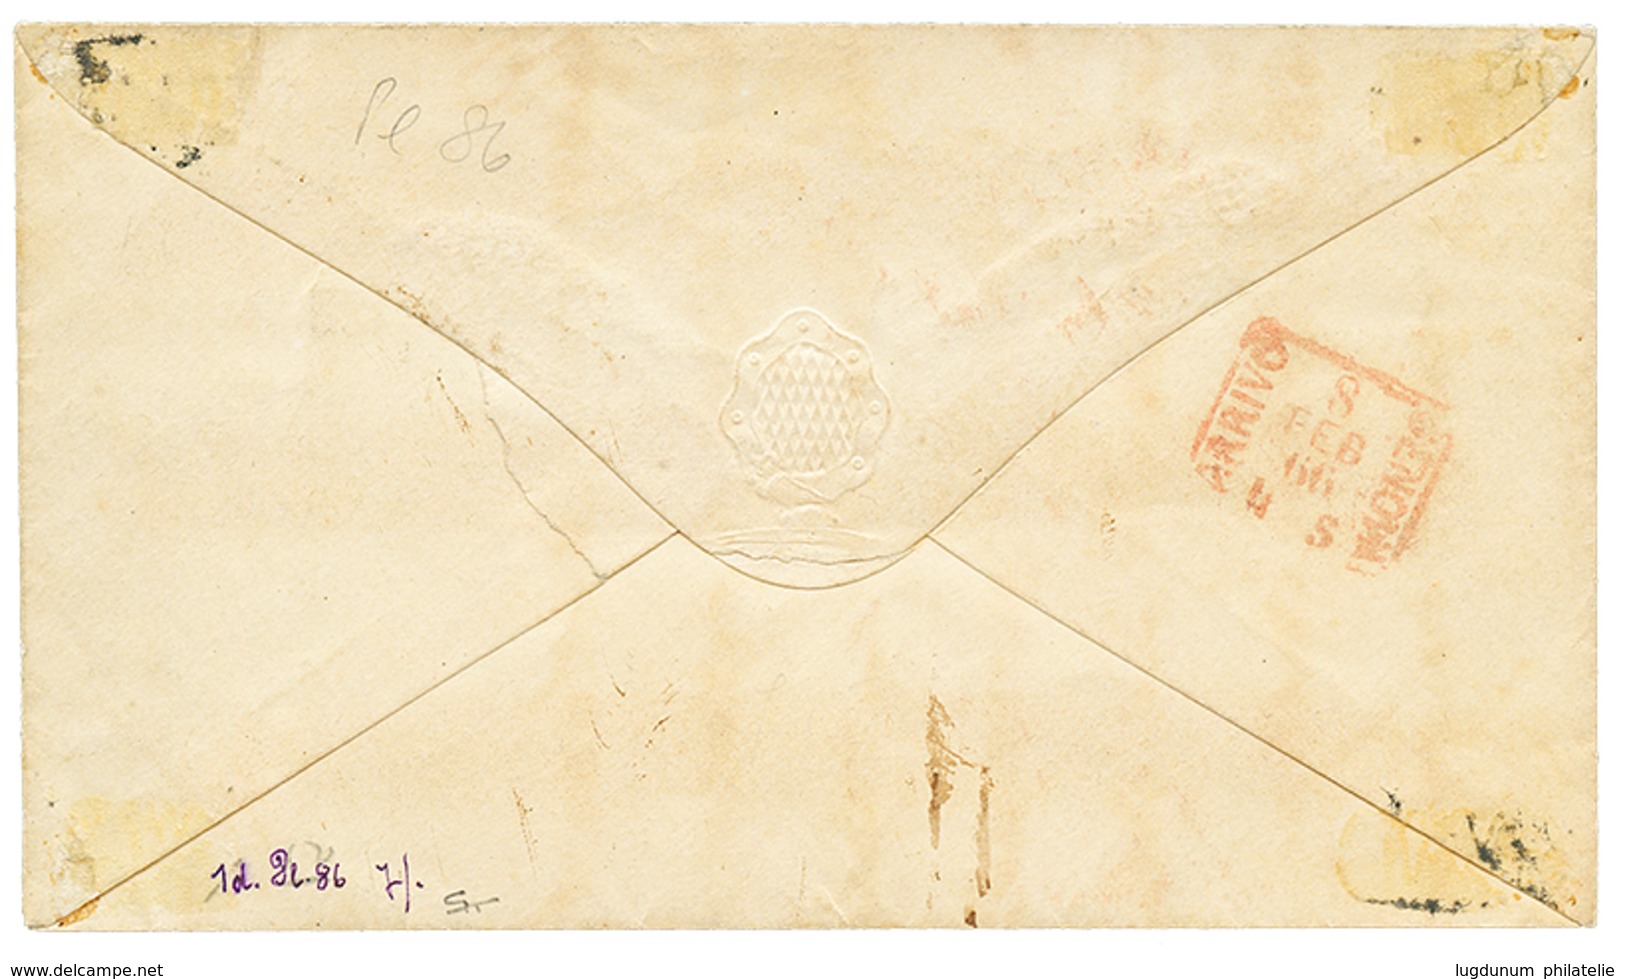 1866 Pair 1d Canc. A26 + GIBRALTAR + Red VIA DI MARE(E) + Tax "4" On Envelope To ITALY. Vf. - Gibraltar